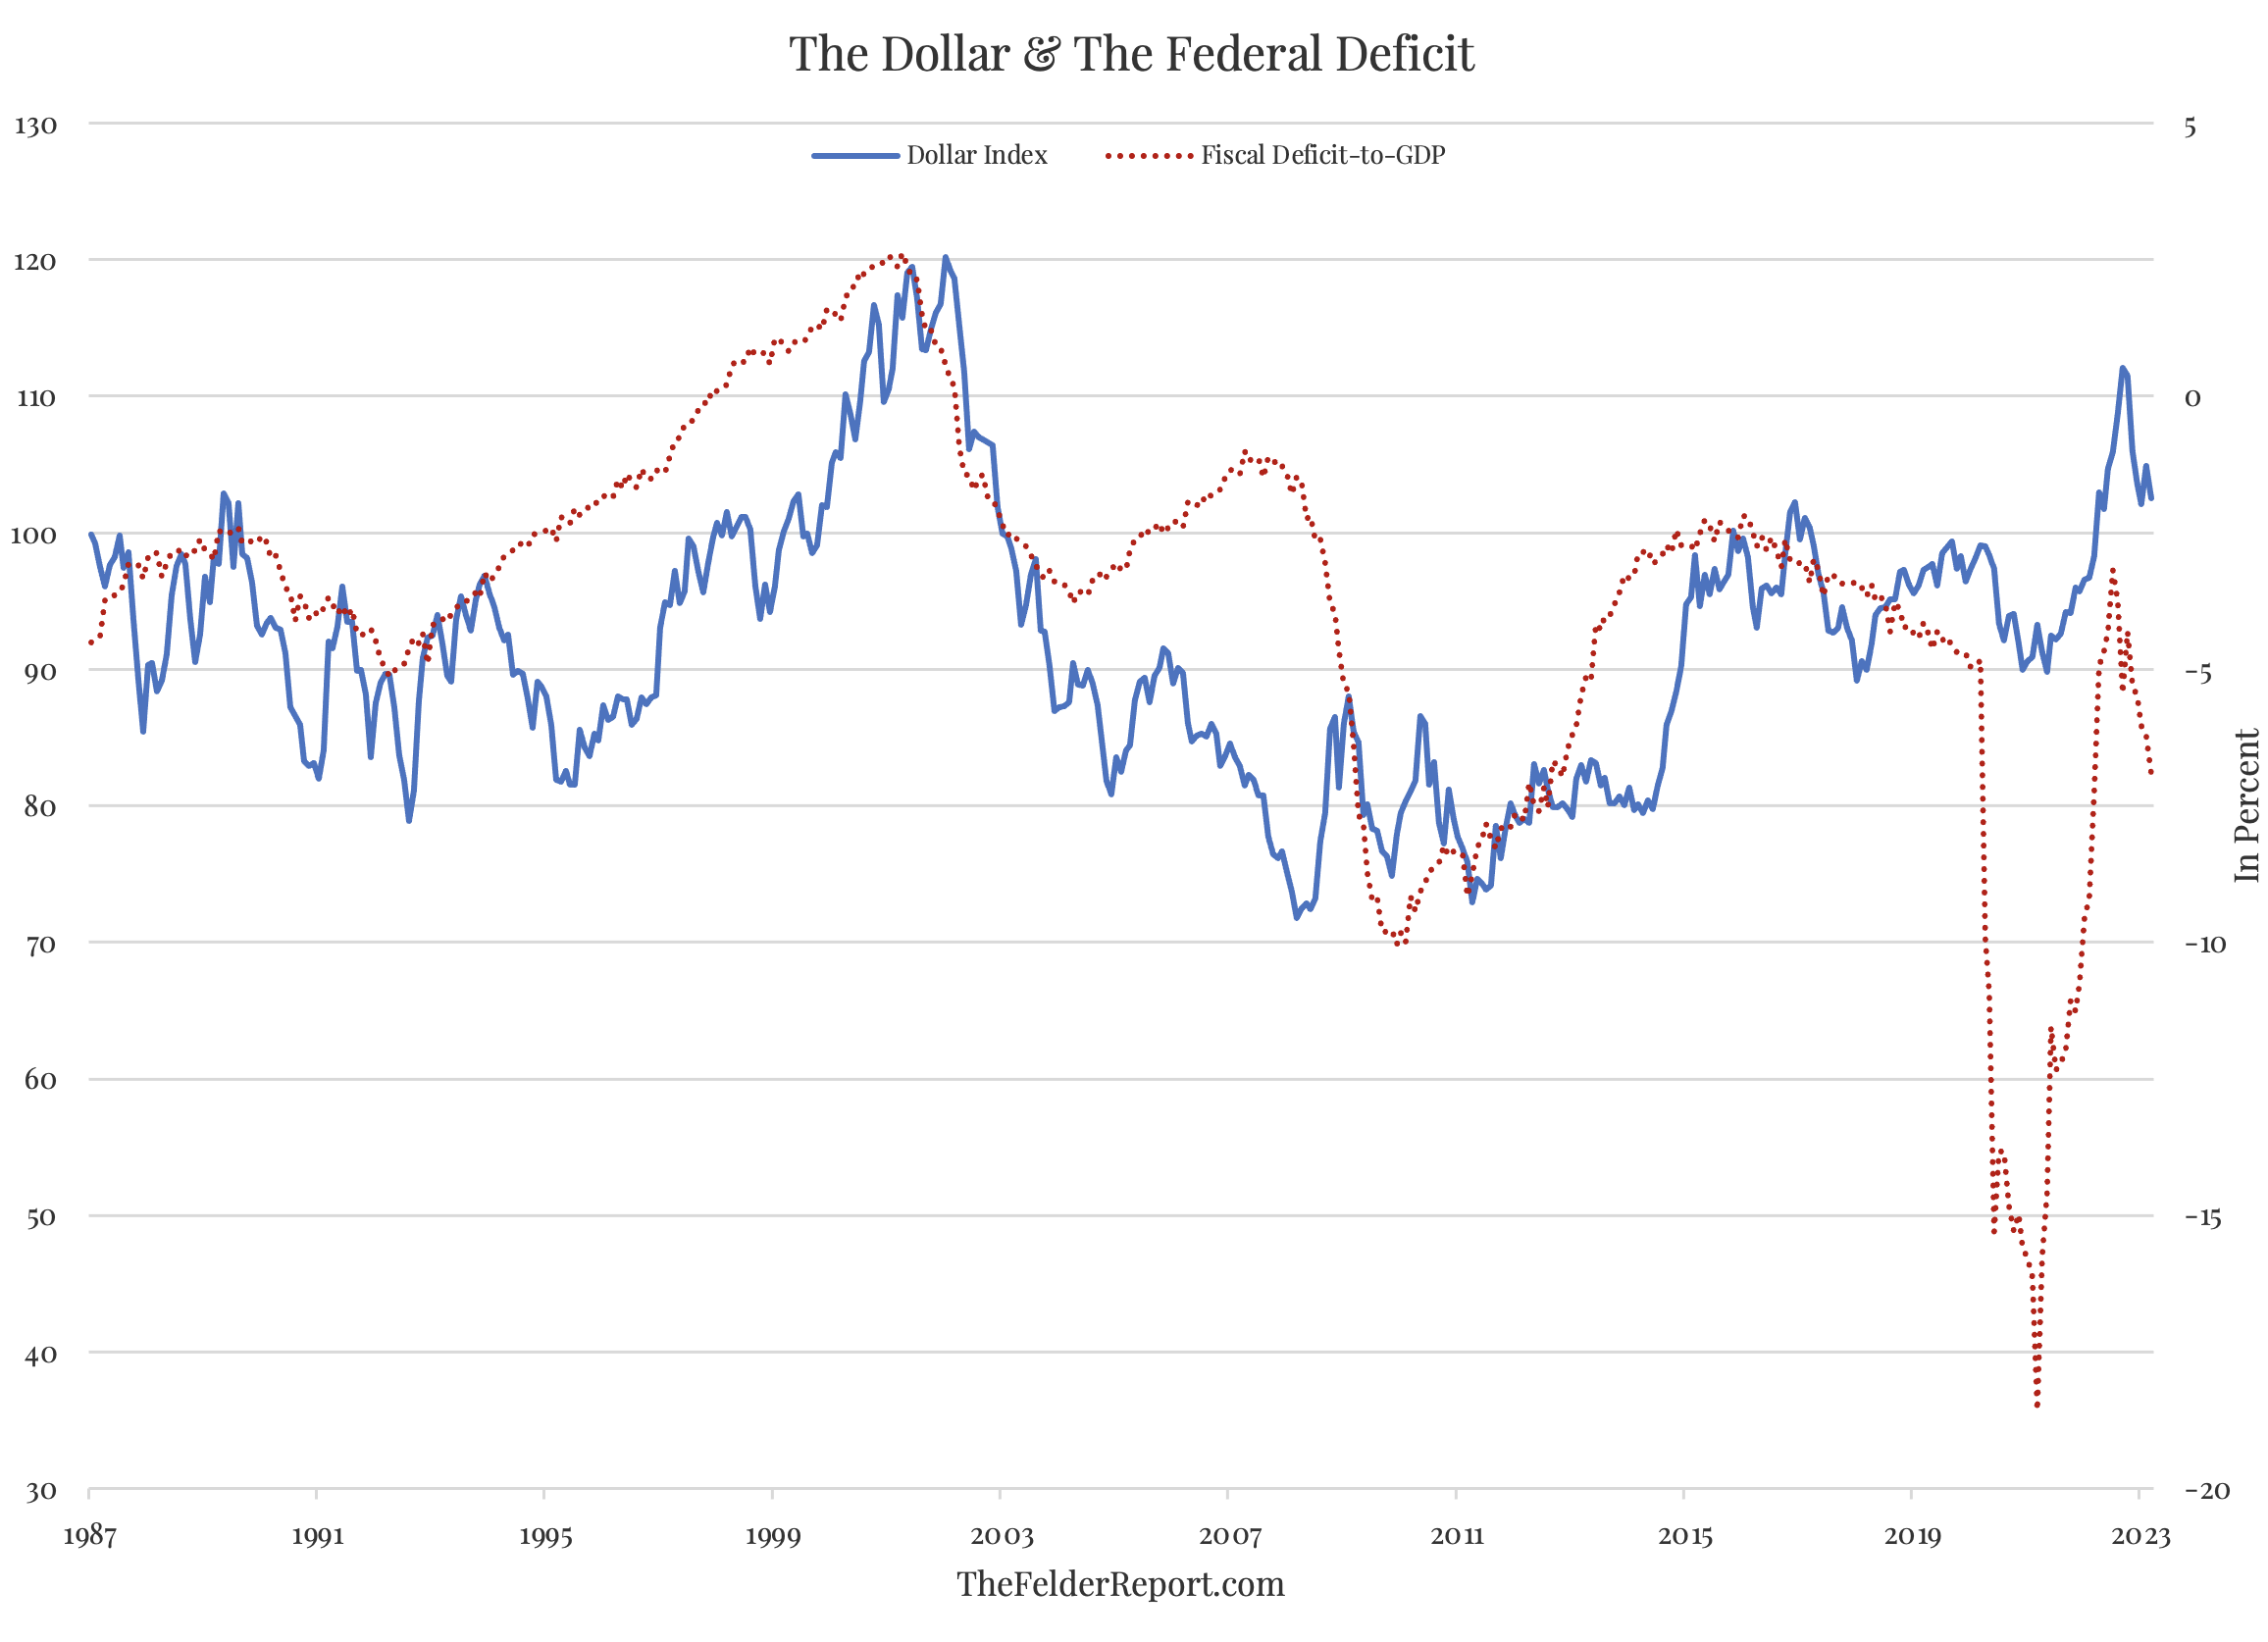 Dollar Index vs Fiscal Deficit